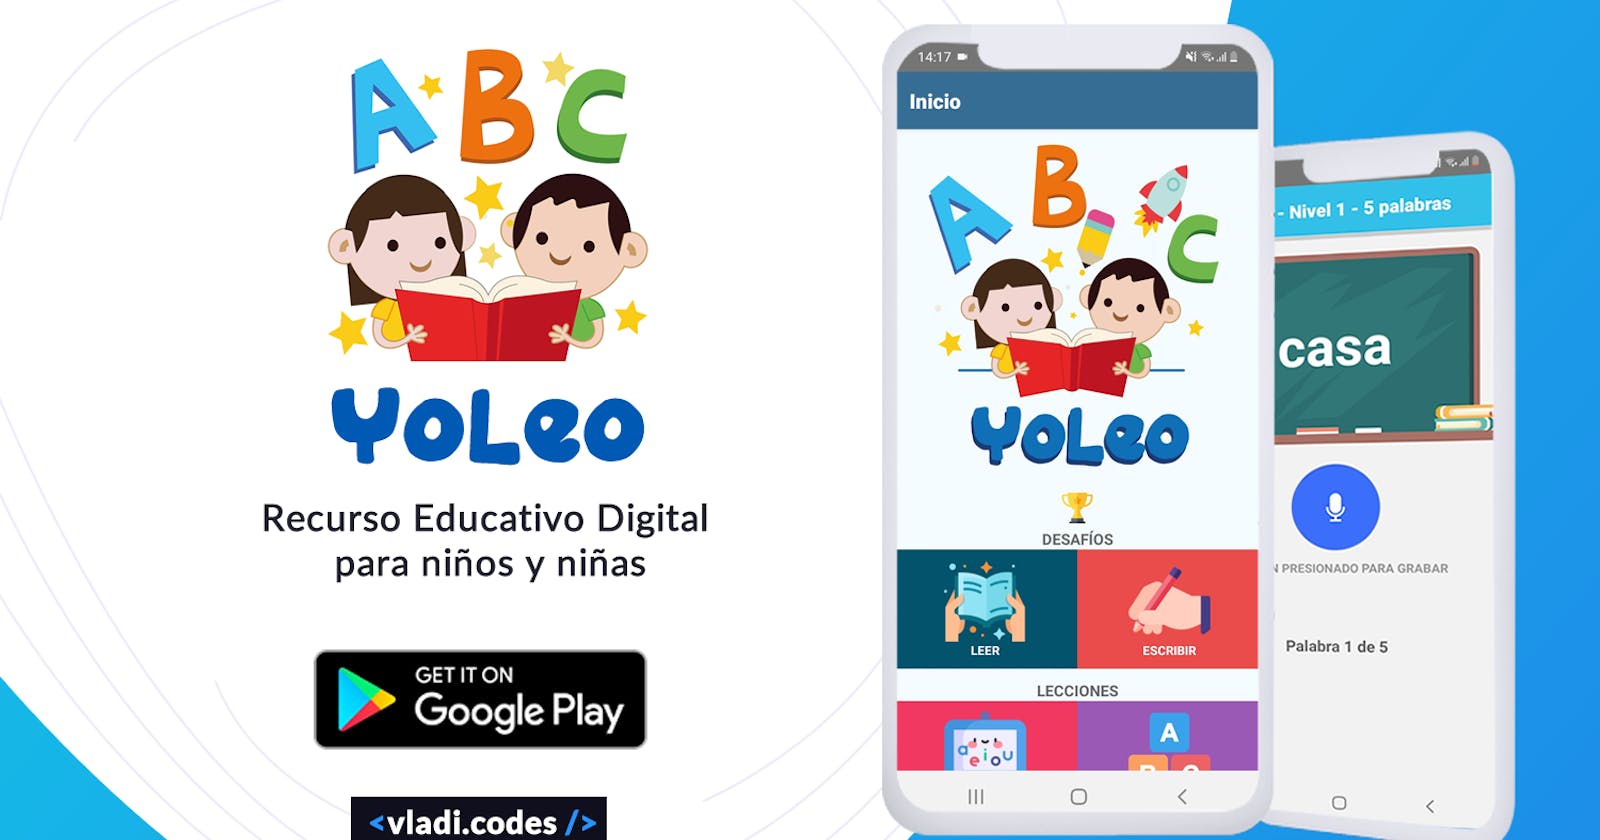 YoLeo App - Digital Learning Resource for Kids